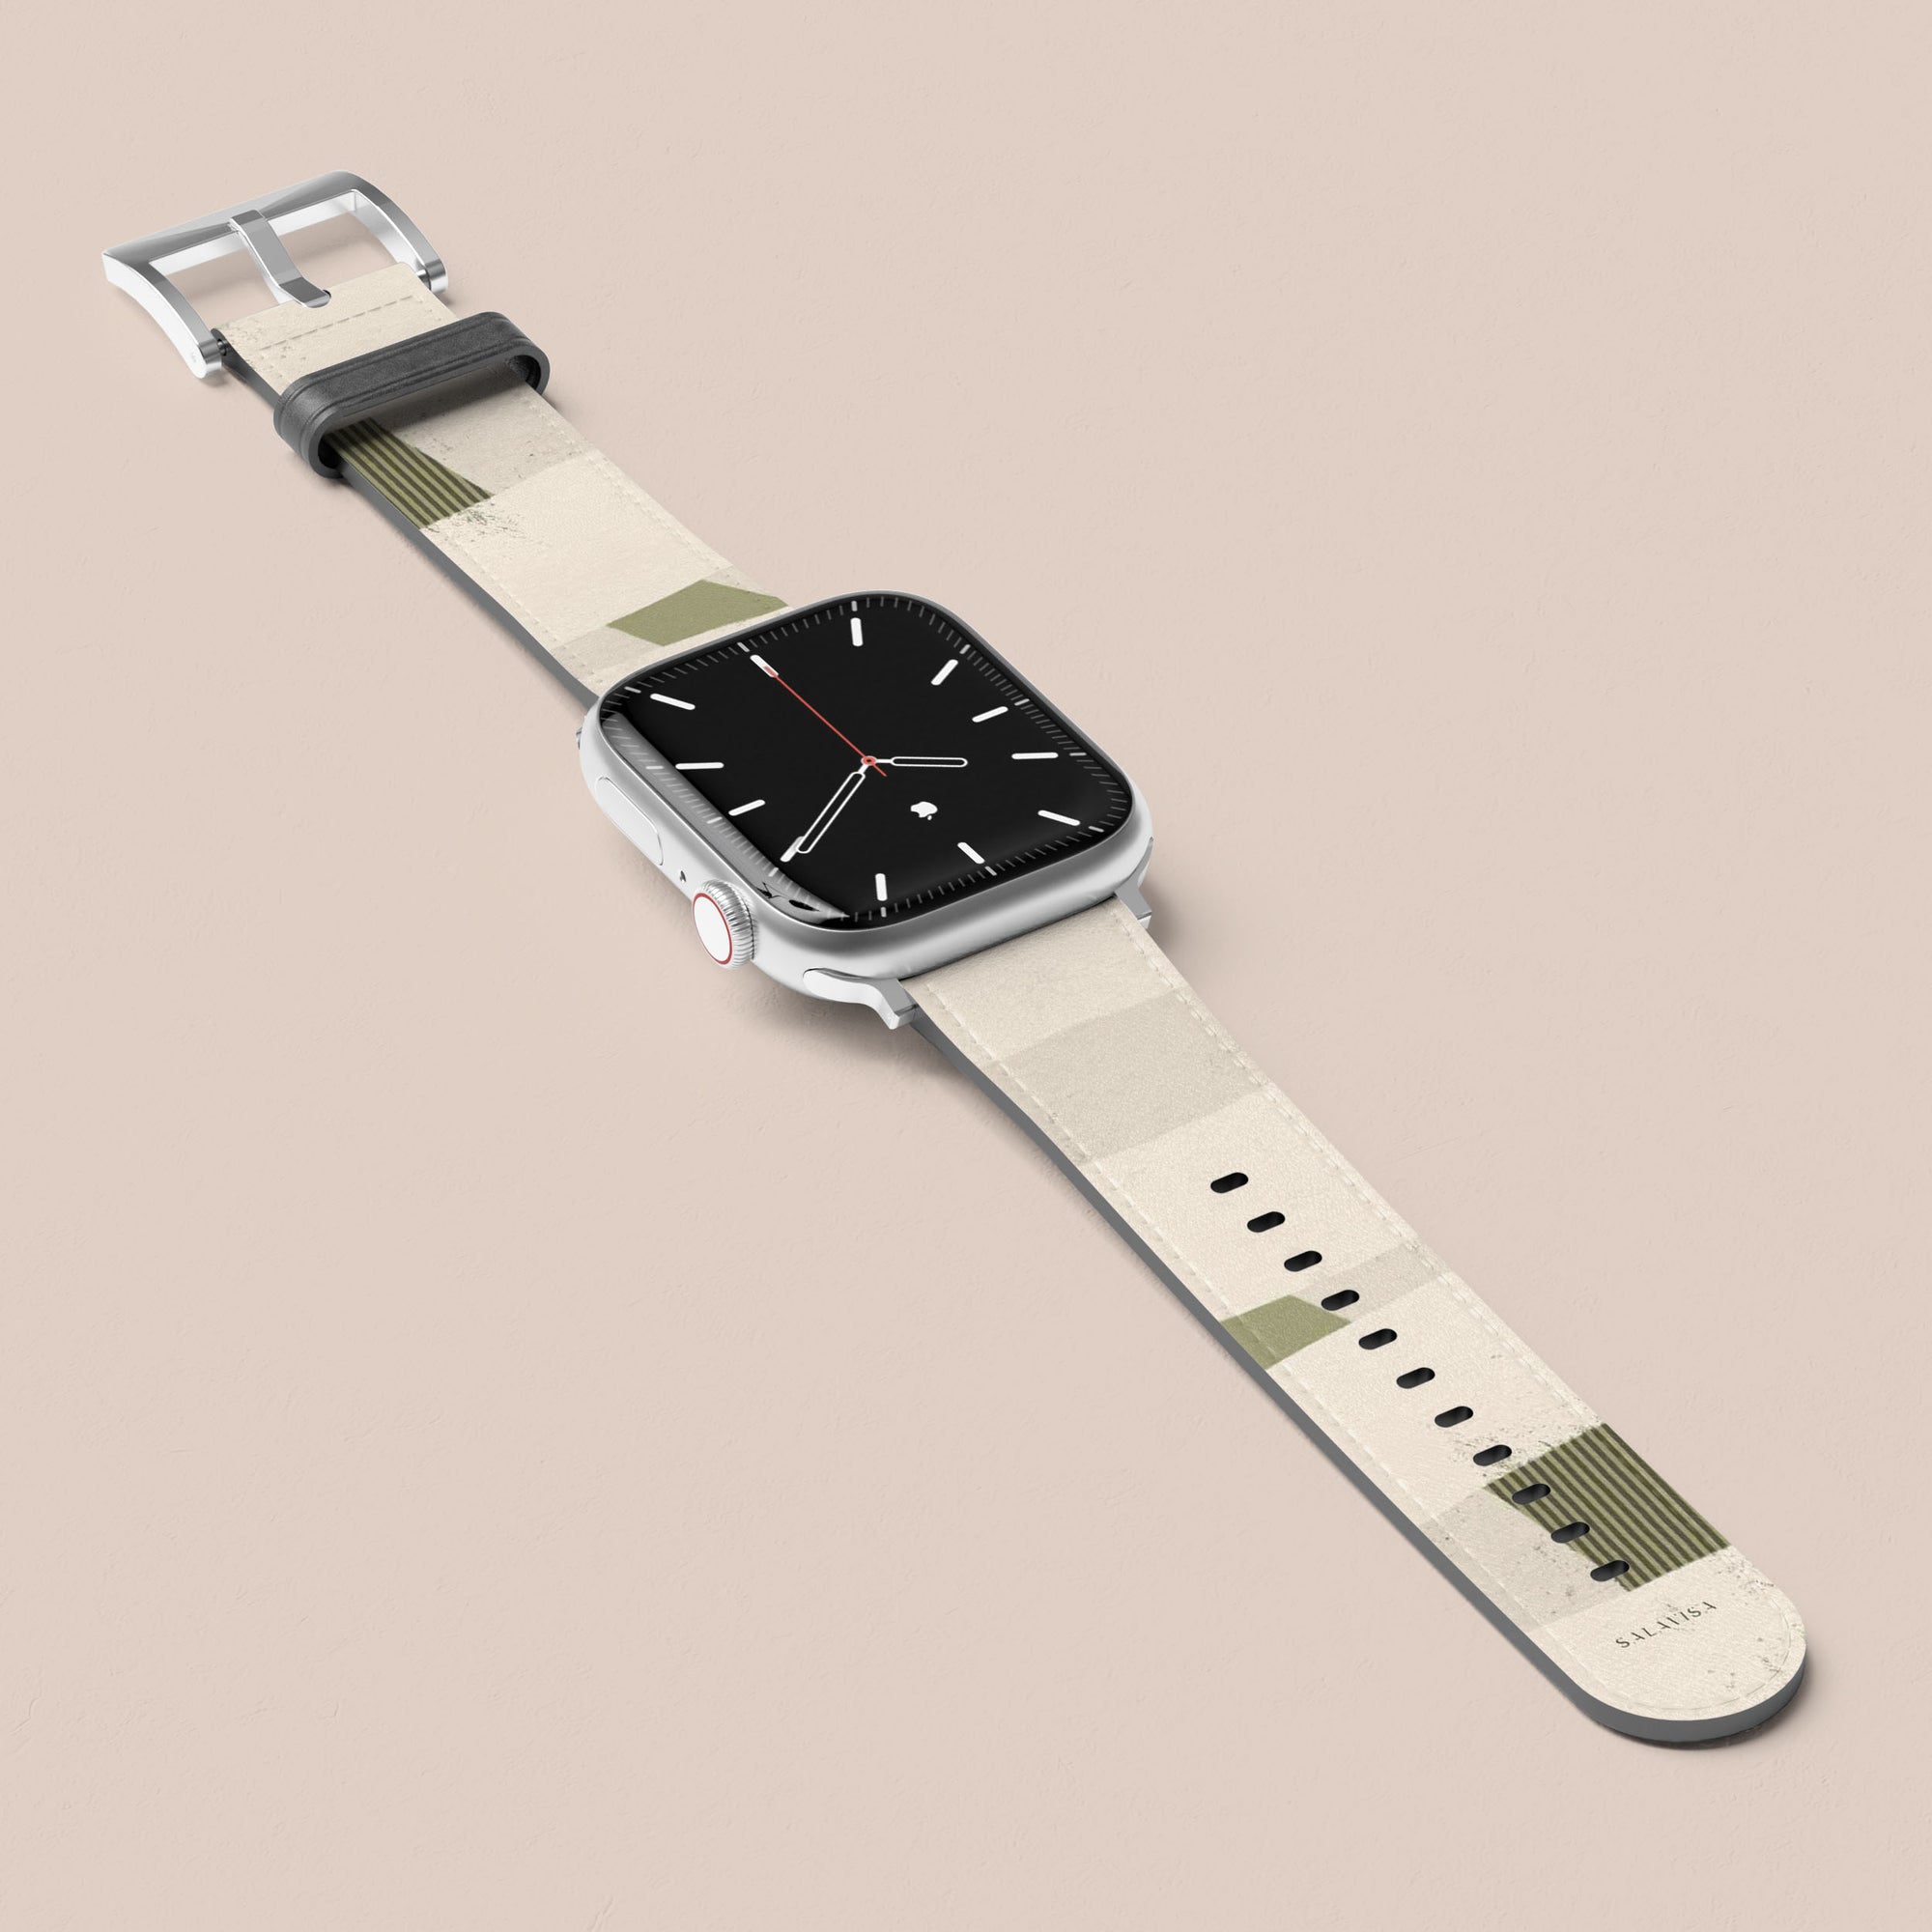 Green Organic Apple Watch Band